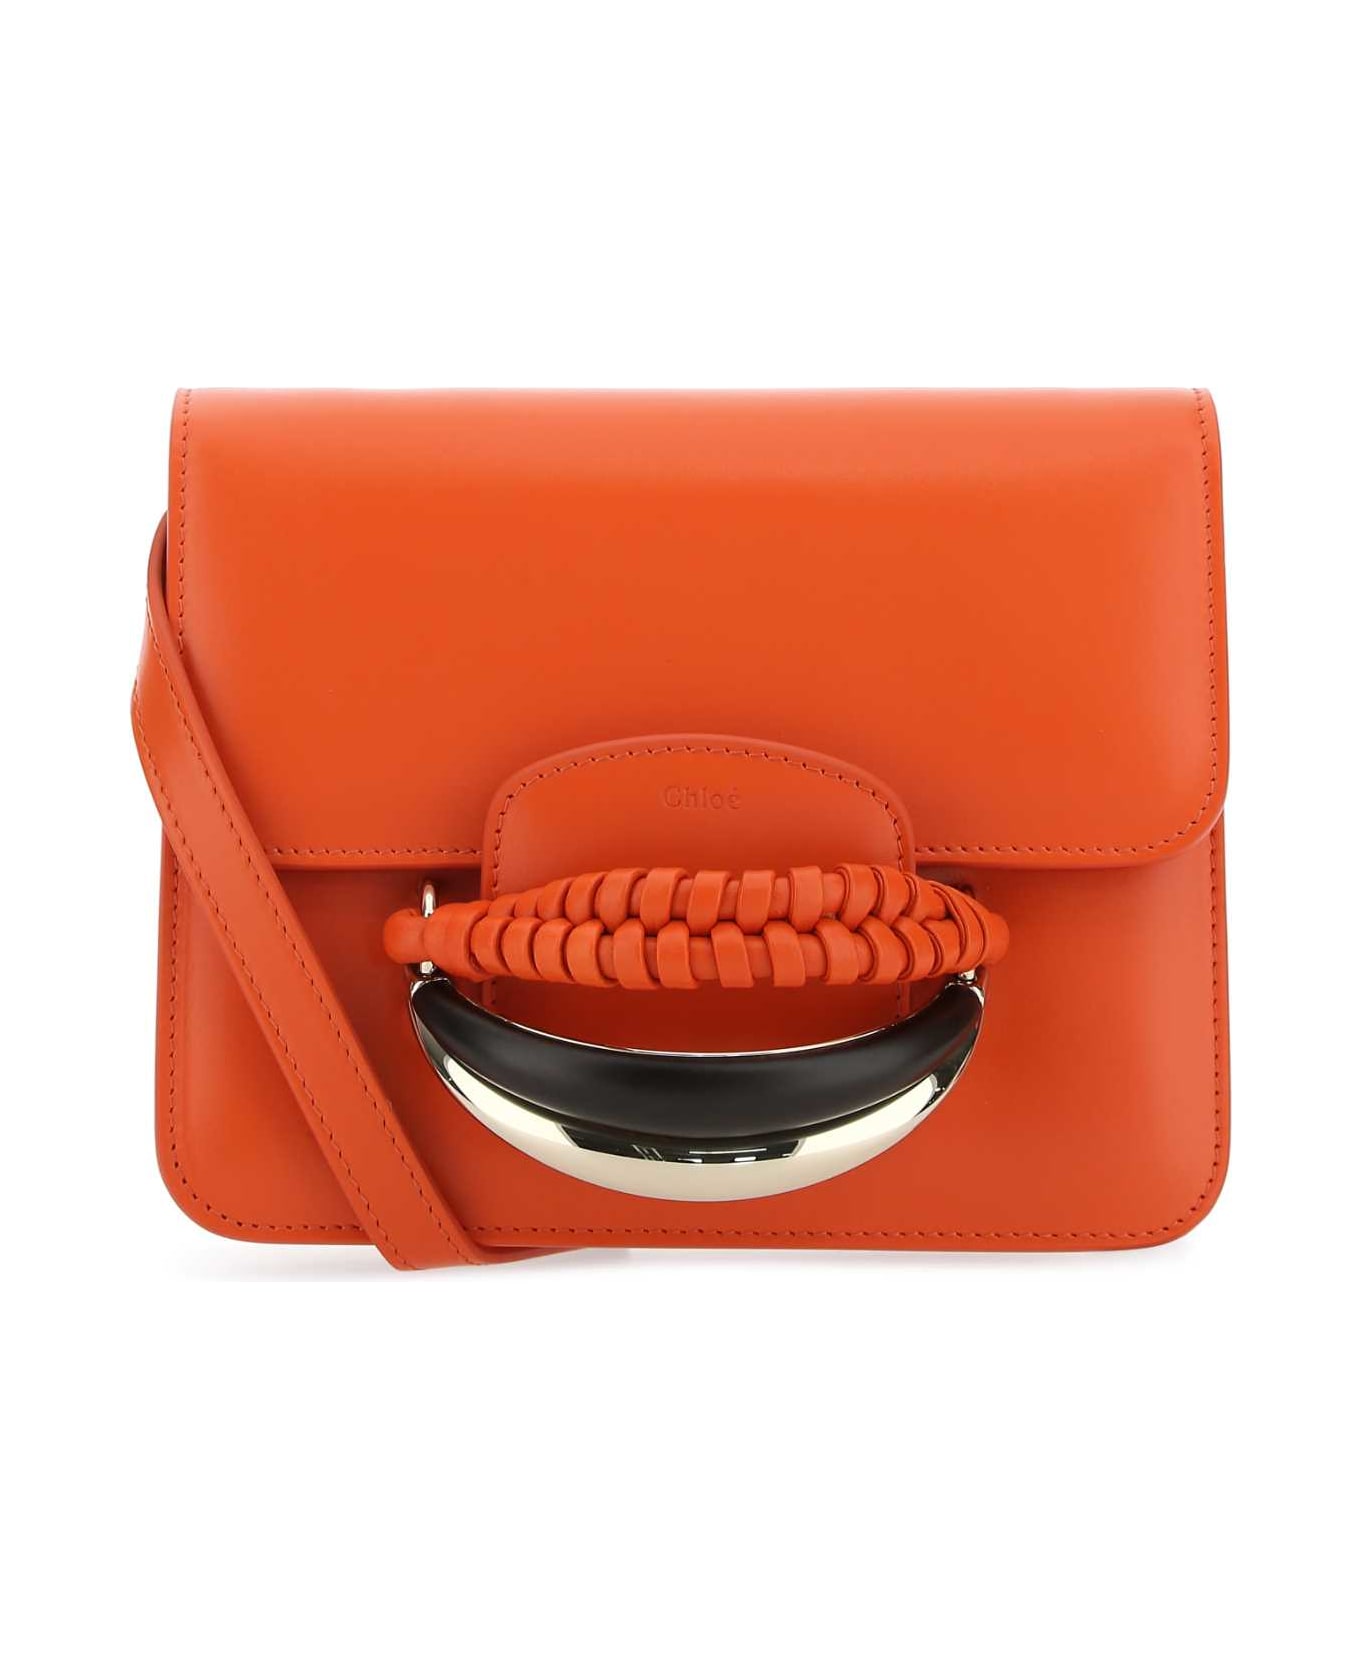 Chloé Orange Leather Kattie Clutch - 837 ショルダーバッグ